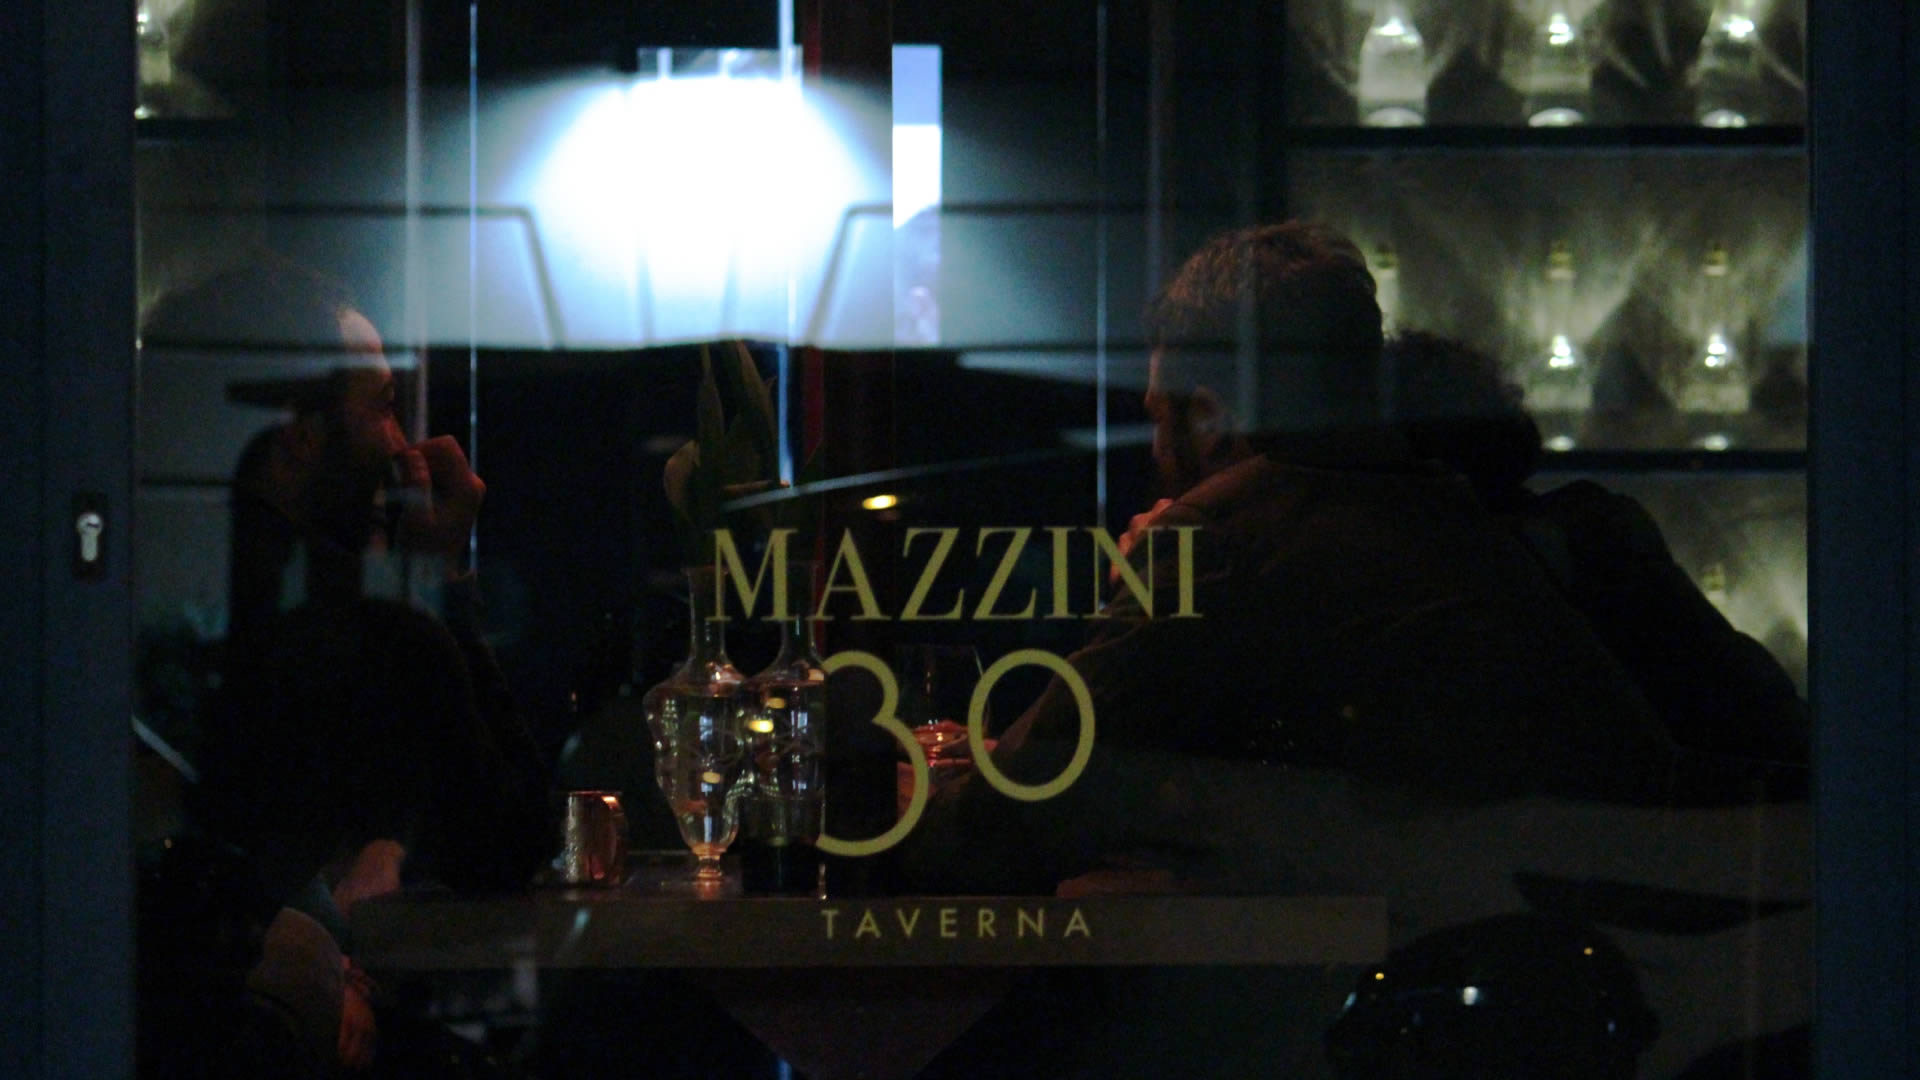 Mazzini 30 Taverna